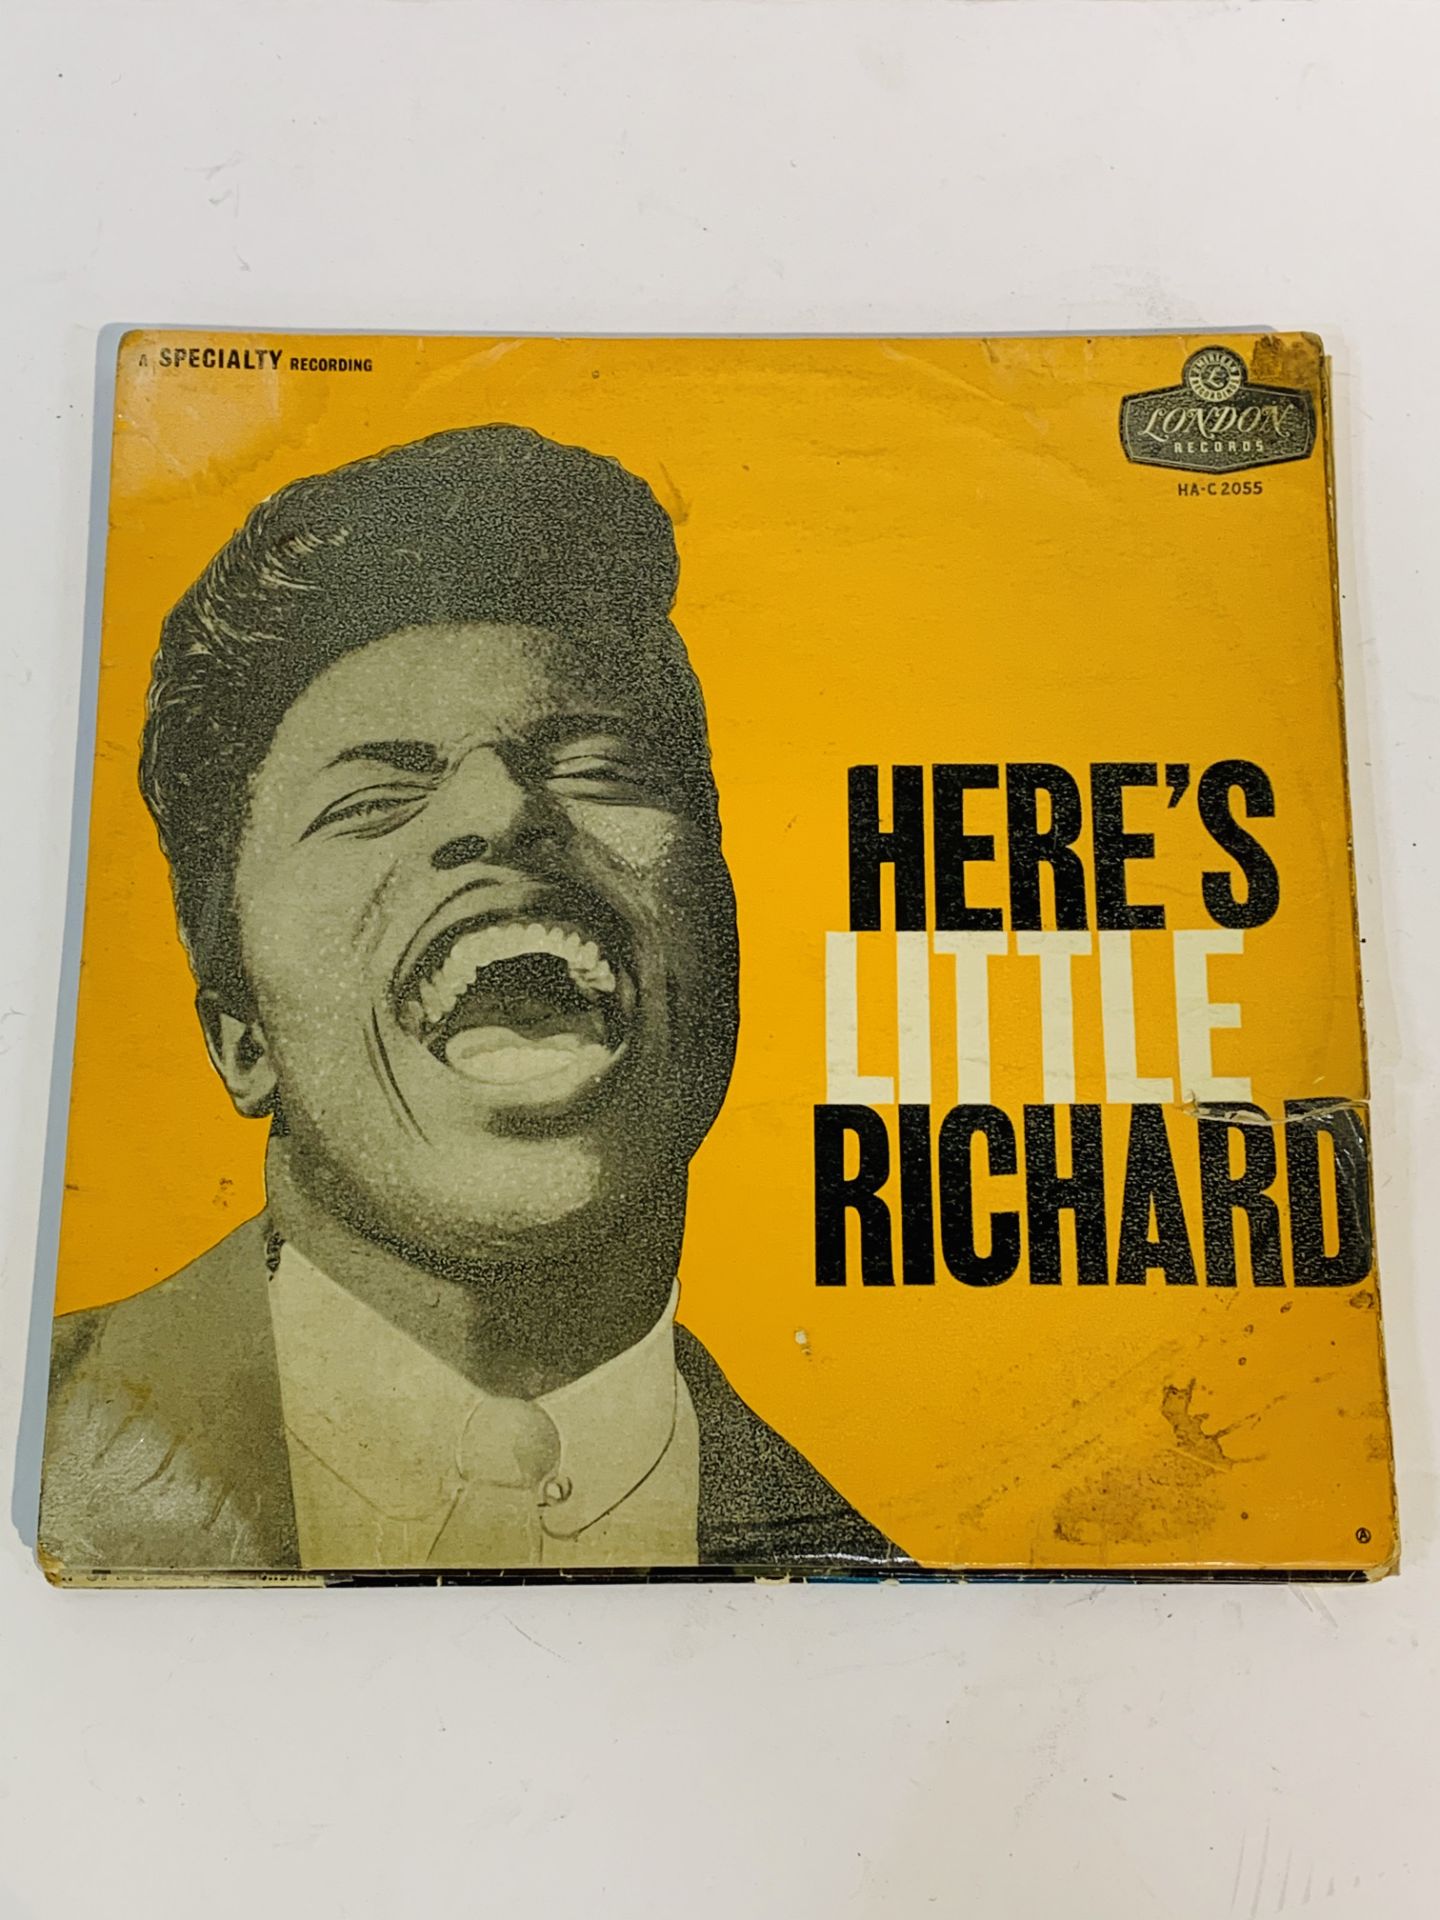 3 original Little Richard LPs